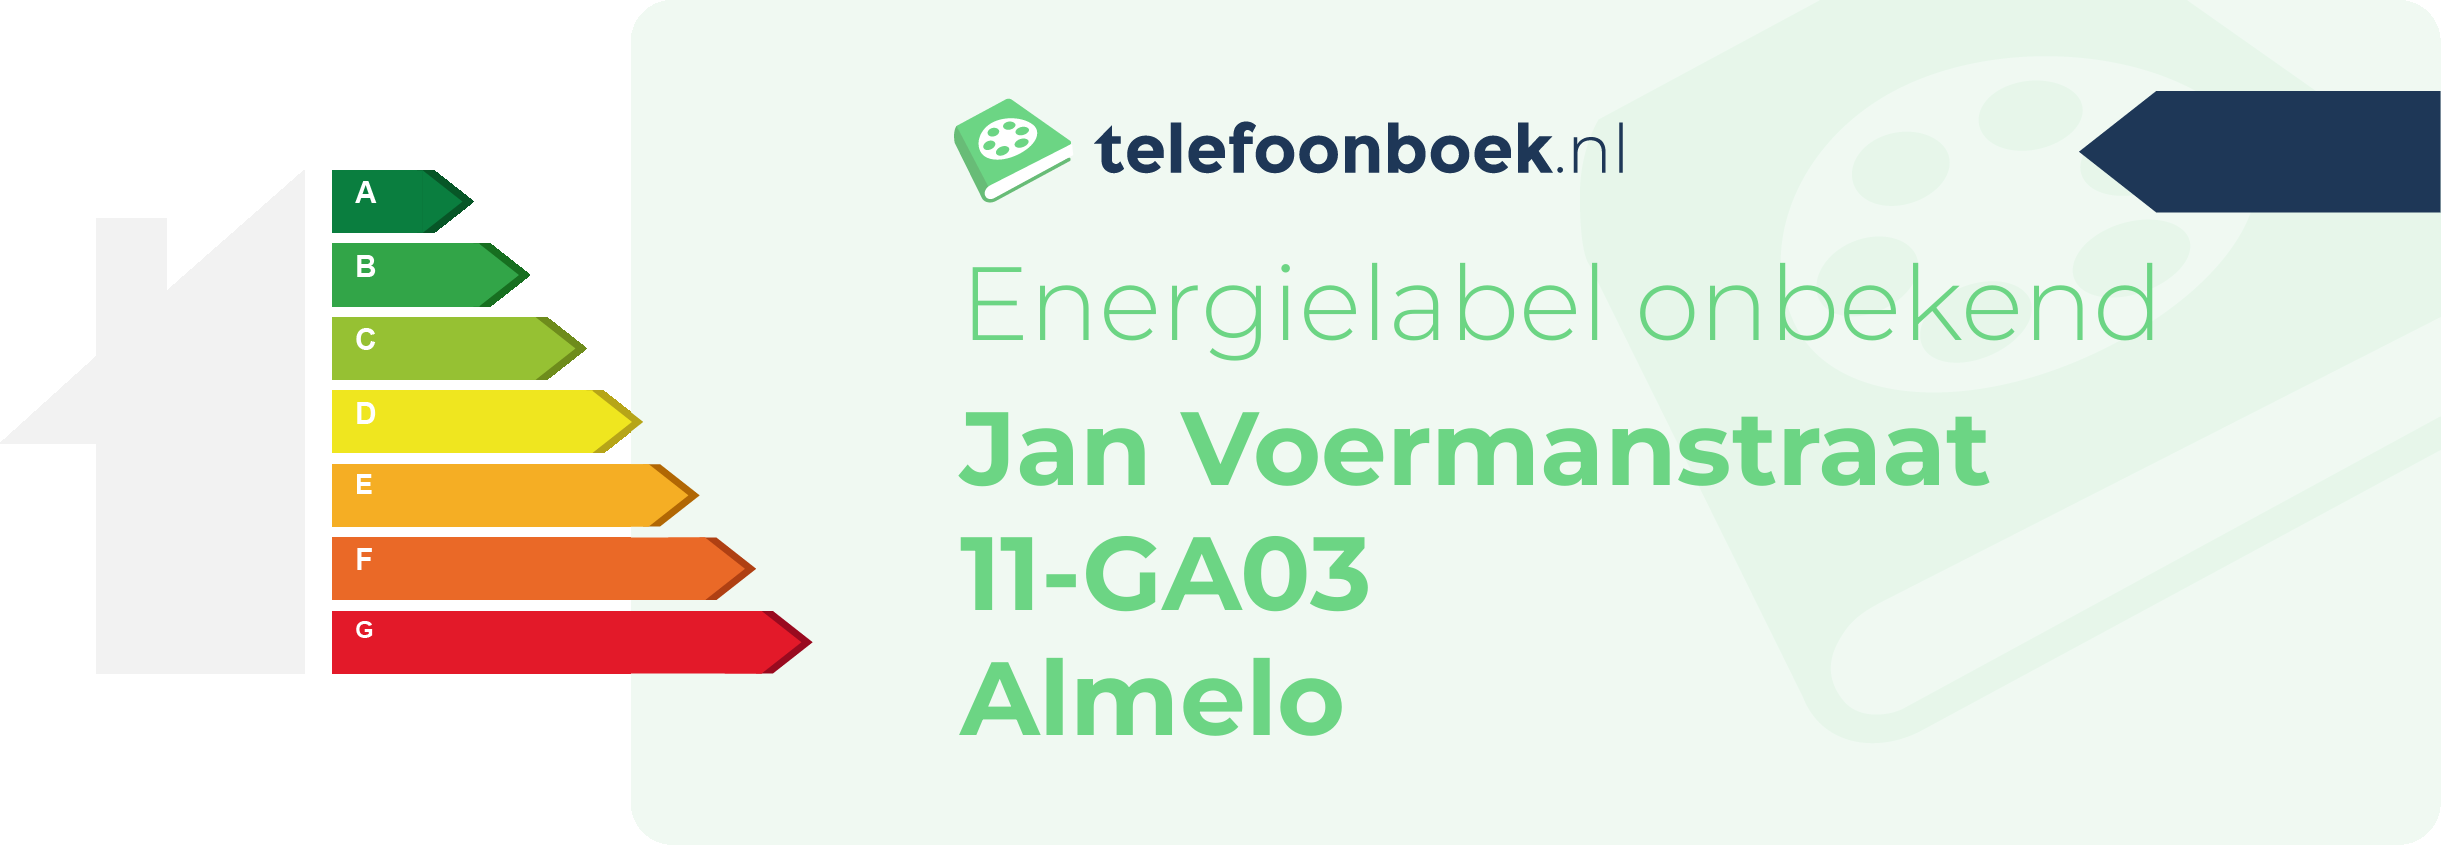 Energielabel Jan Voermanstraat 11-GA03 Almelo